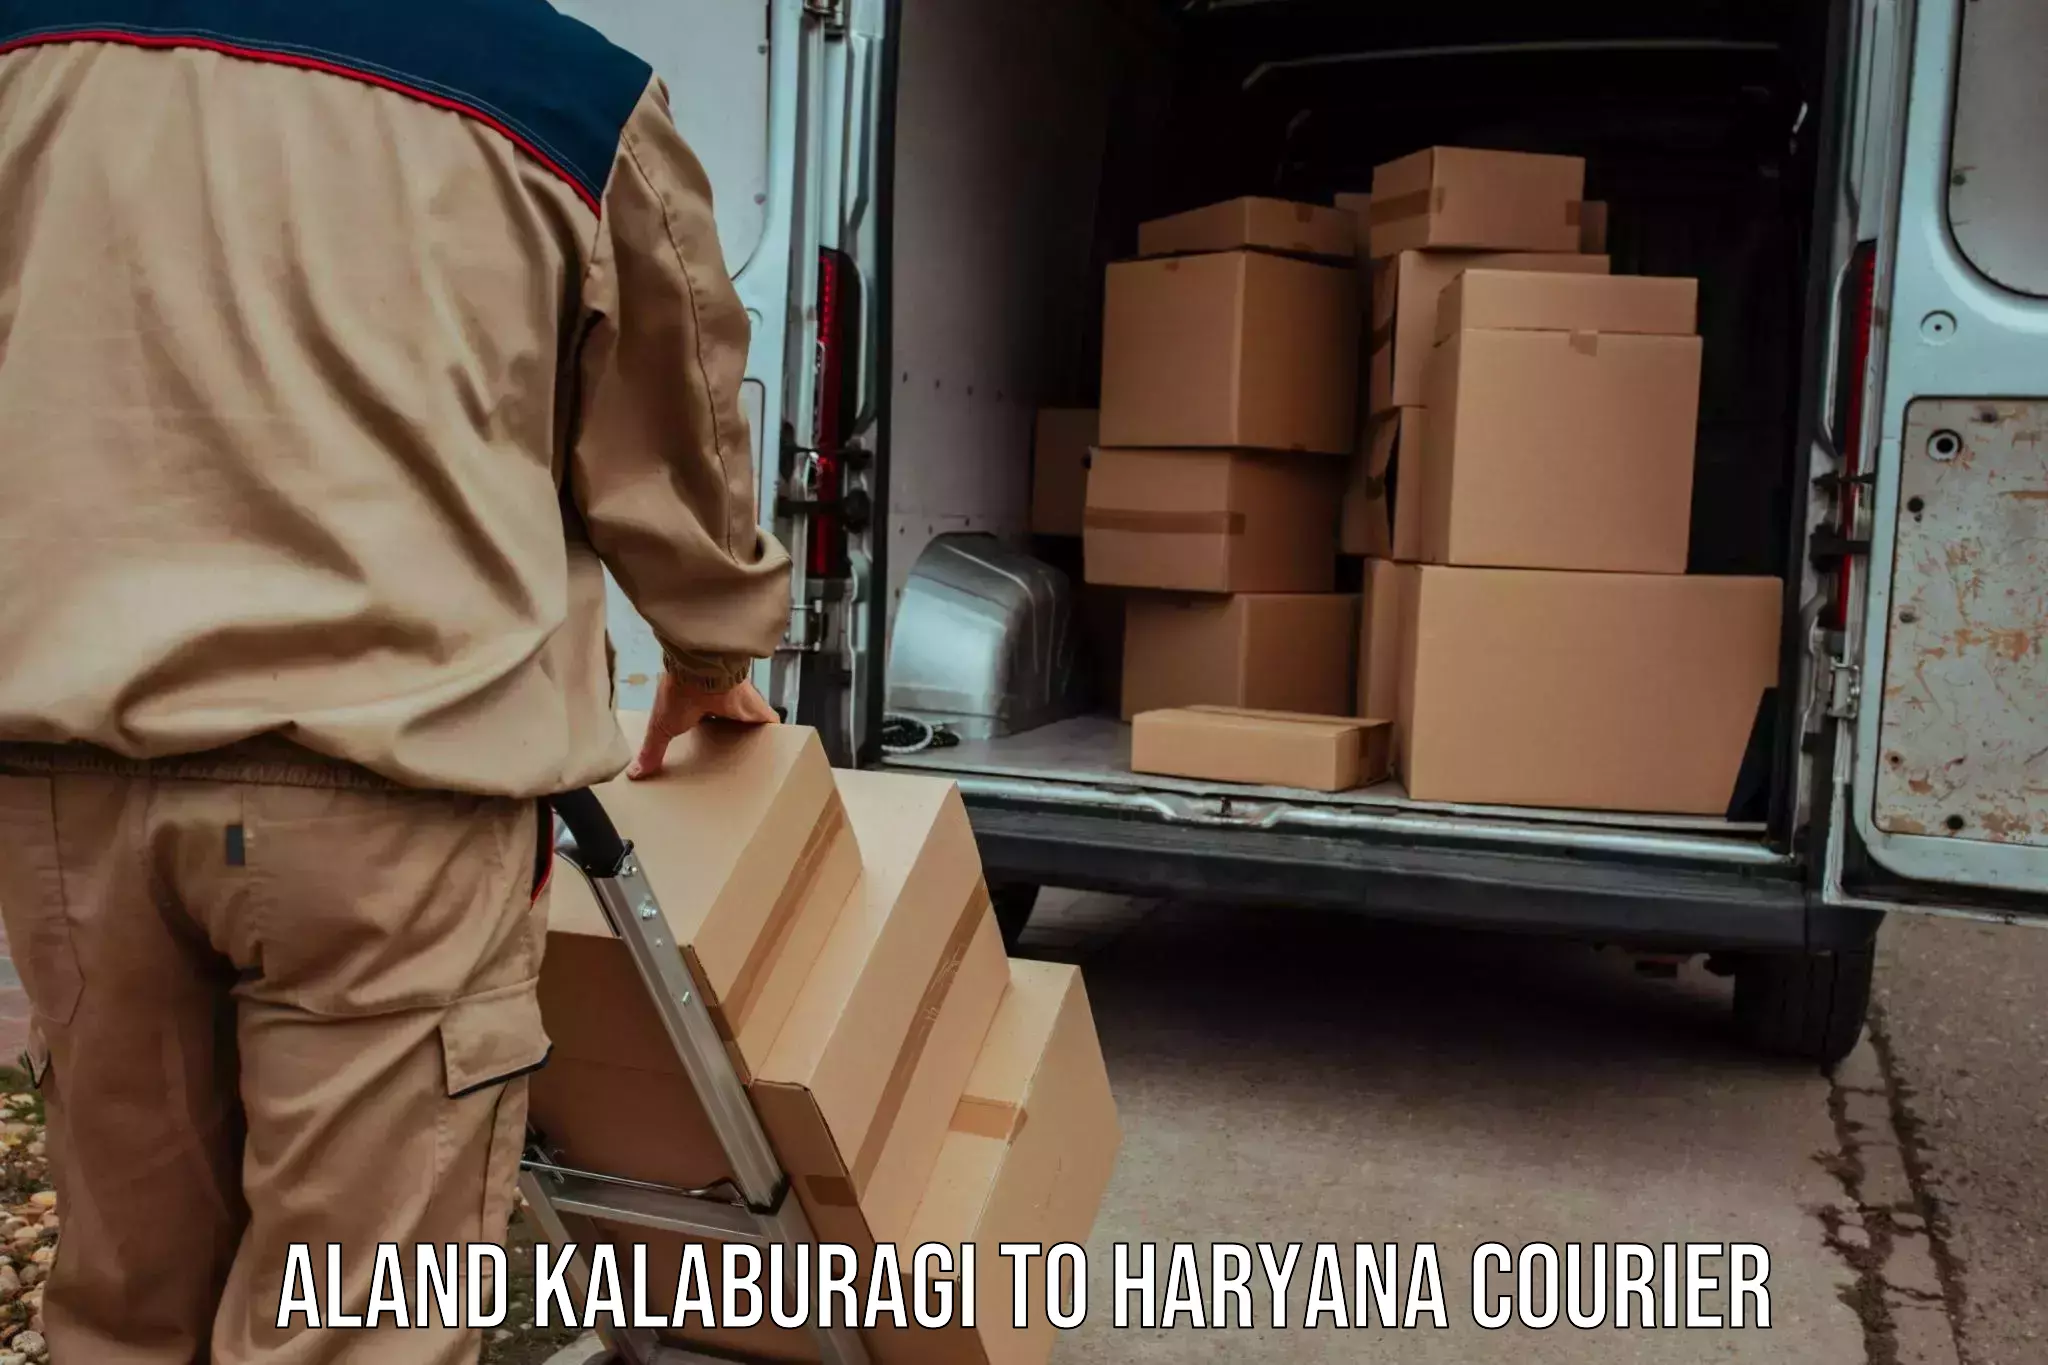 Nationwide parcel services Aland Kalaburagi to NCR Haryana